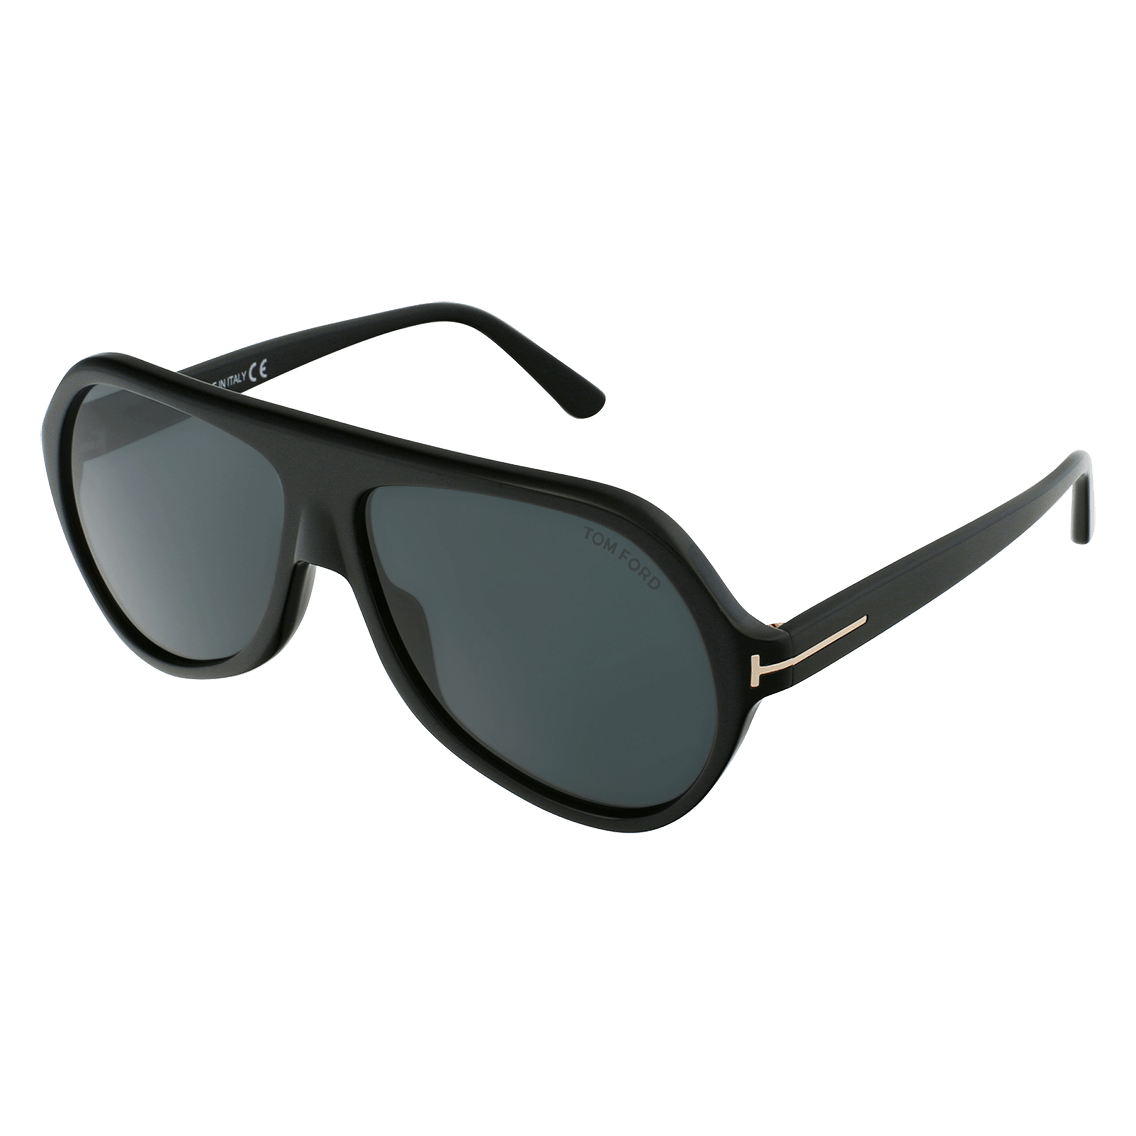 Tom Ford Sunglasses Tom Ford Sunglasses FT0715 01C 68mm Sandrine (Copy) Eyeglasses Eyewear UK USA Australia 